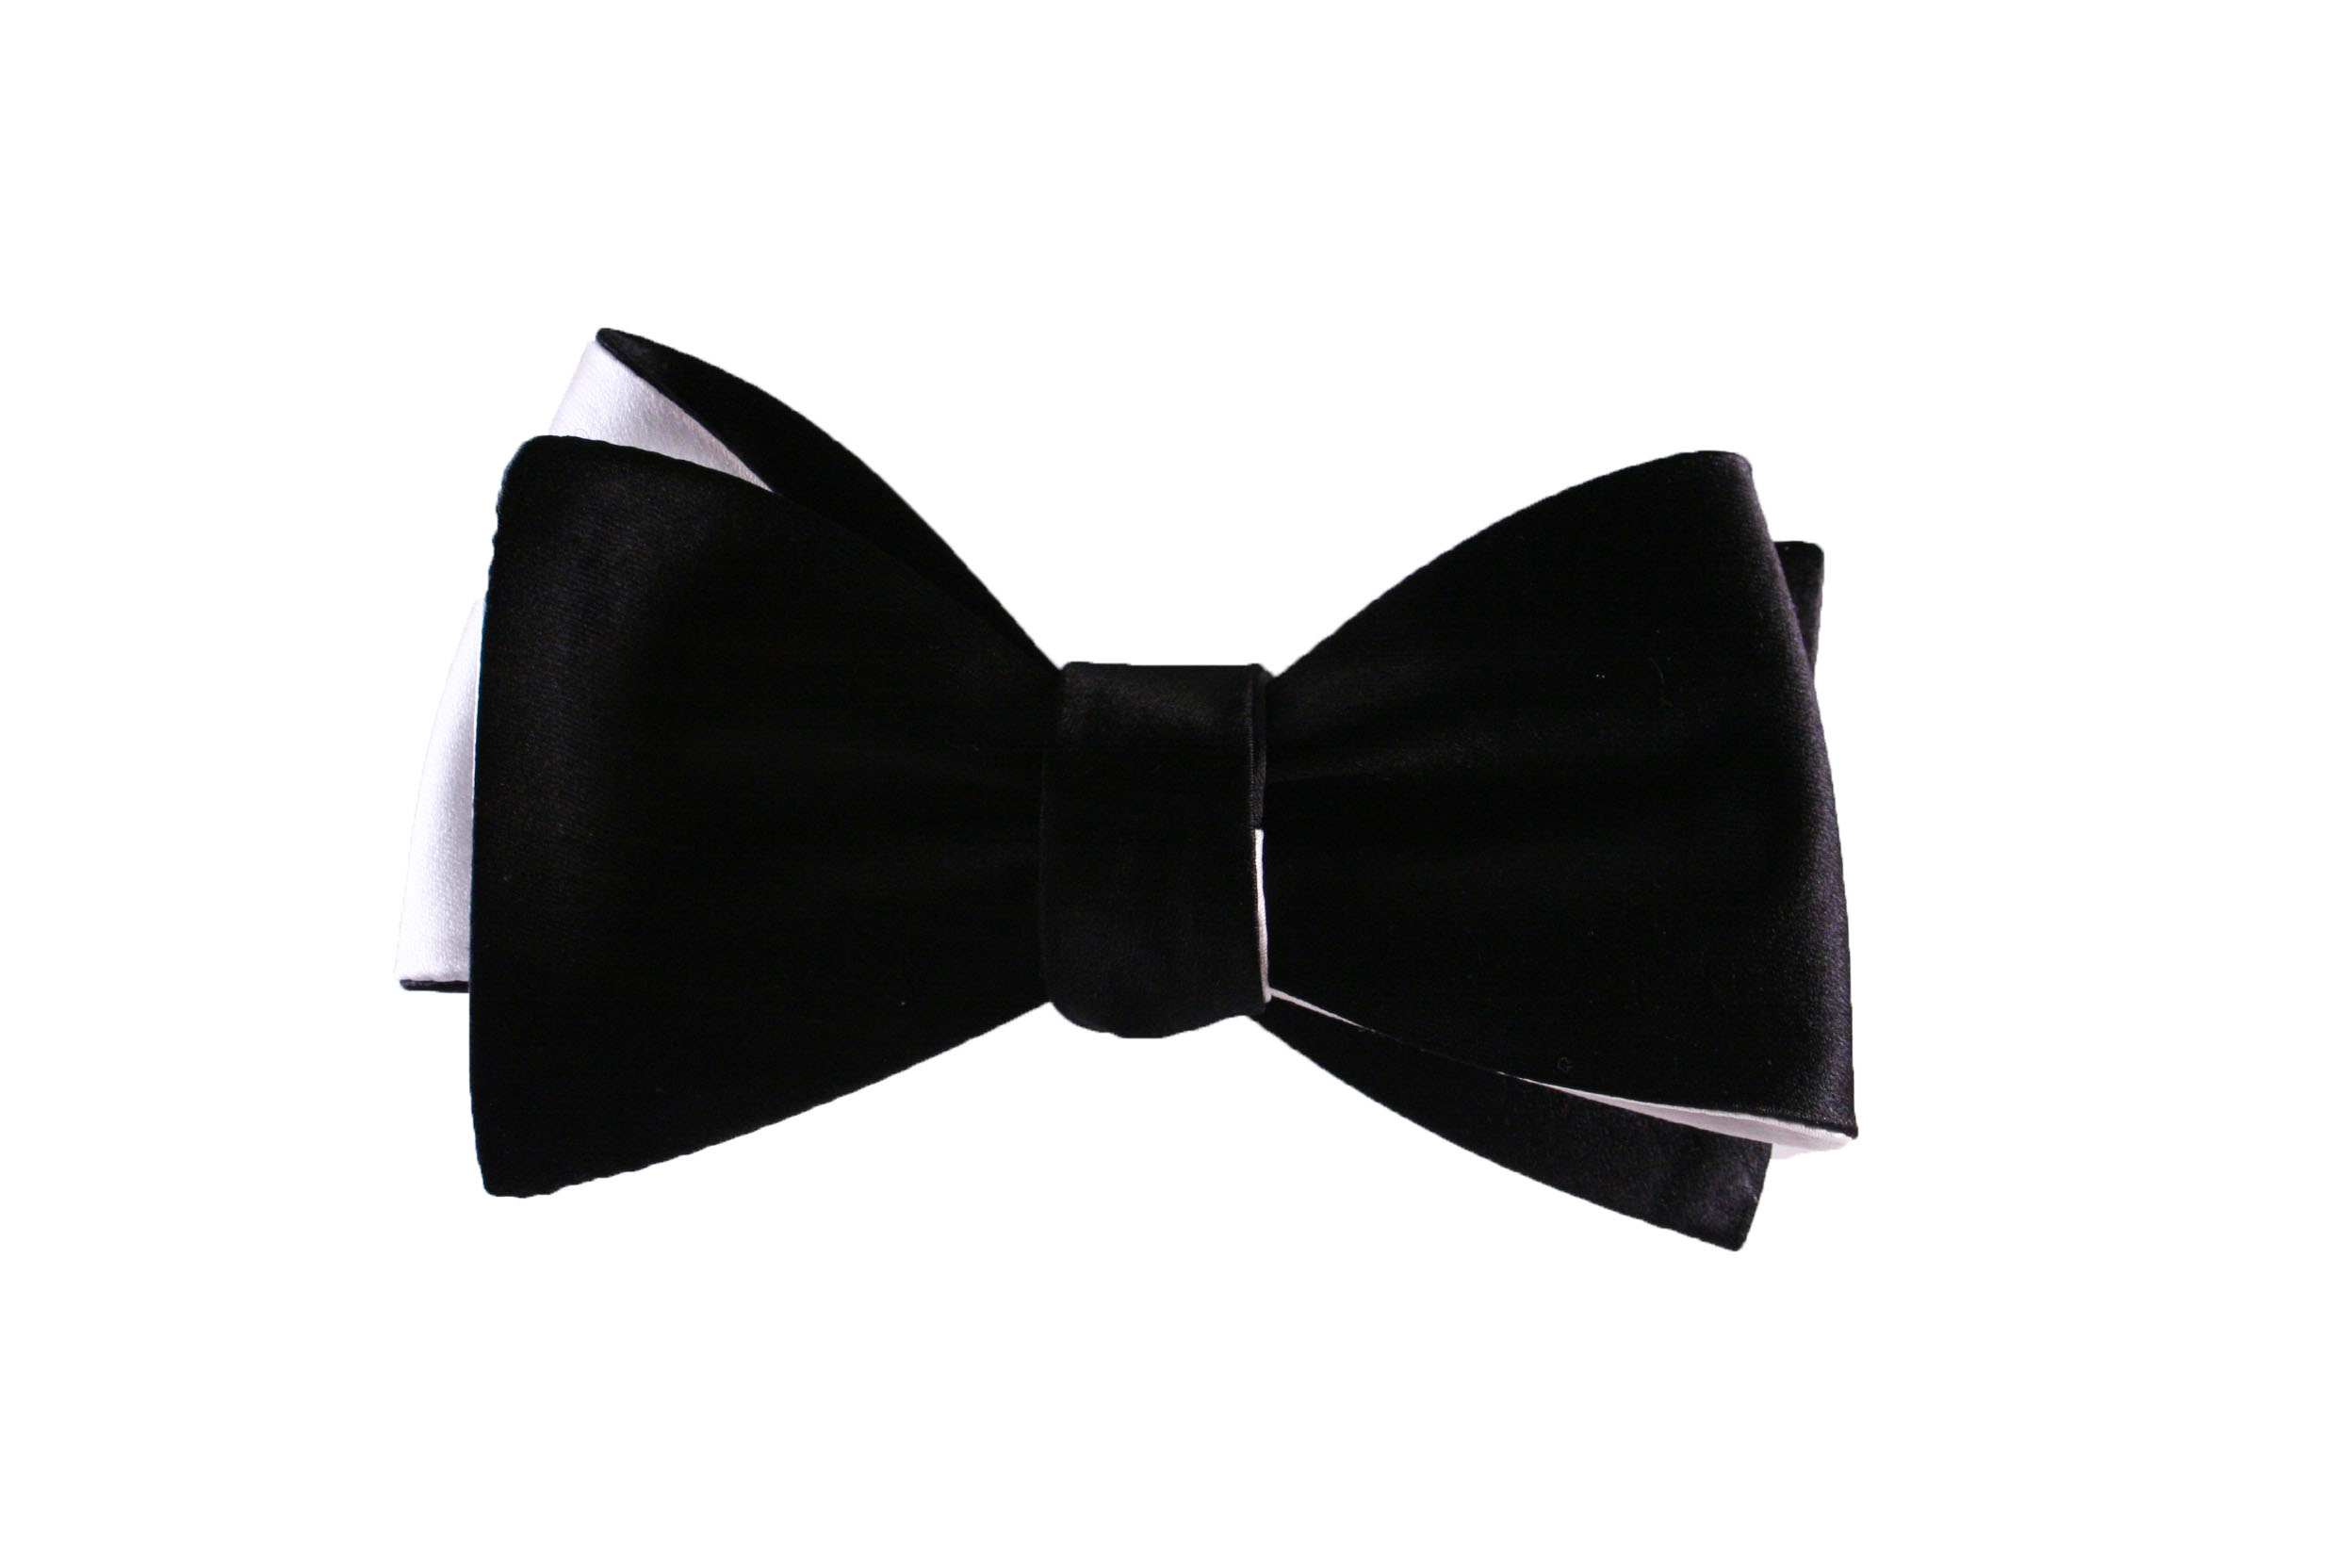 Black bow tie clipart - ClipartFox